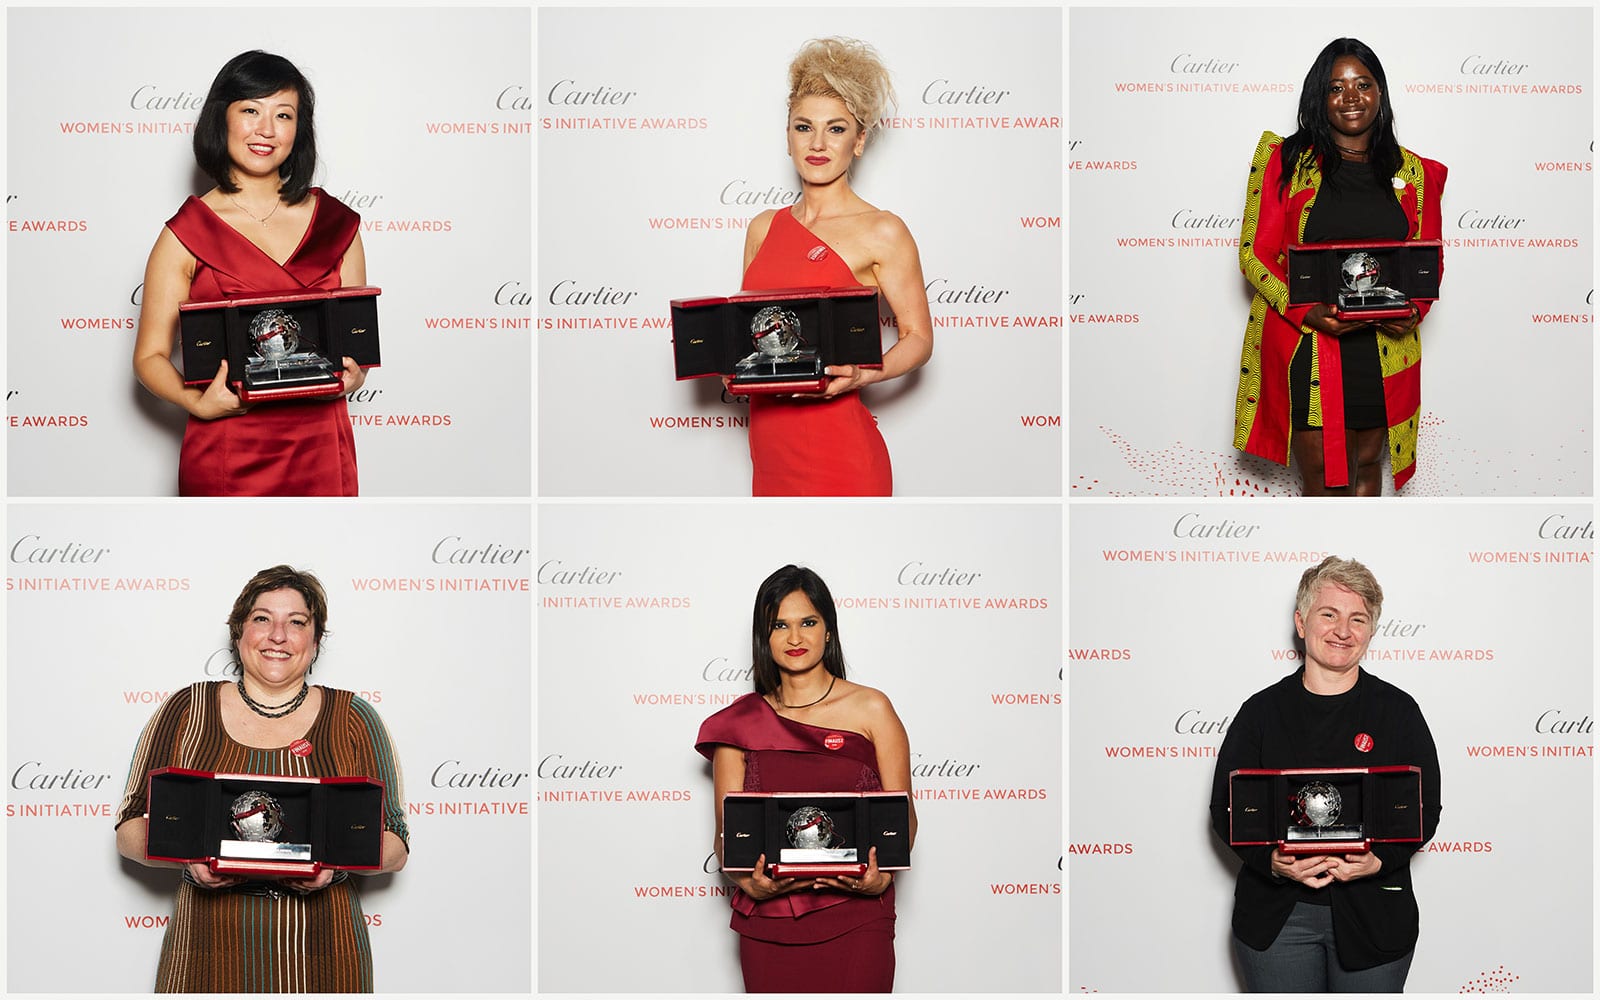 Winners of the Cartier Women's Initiative Awards 2018